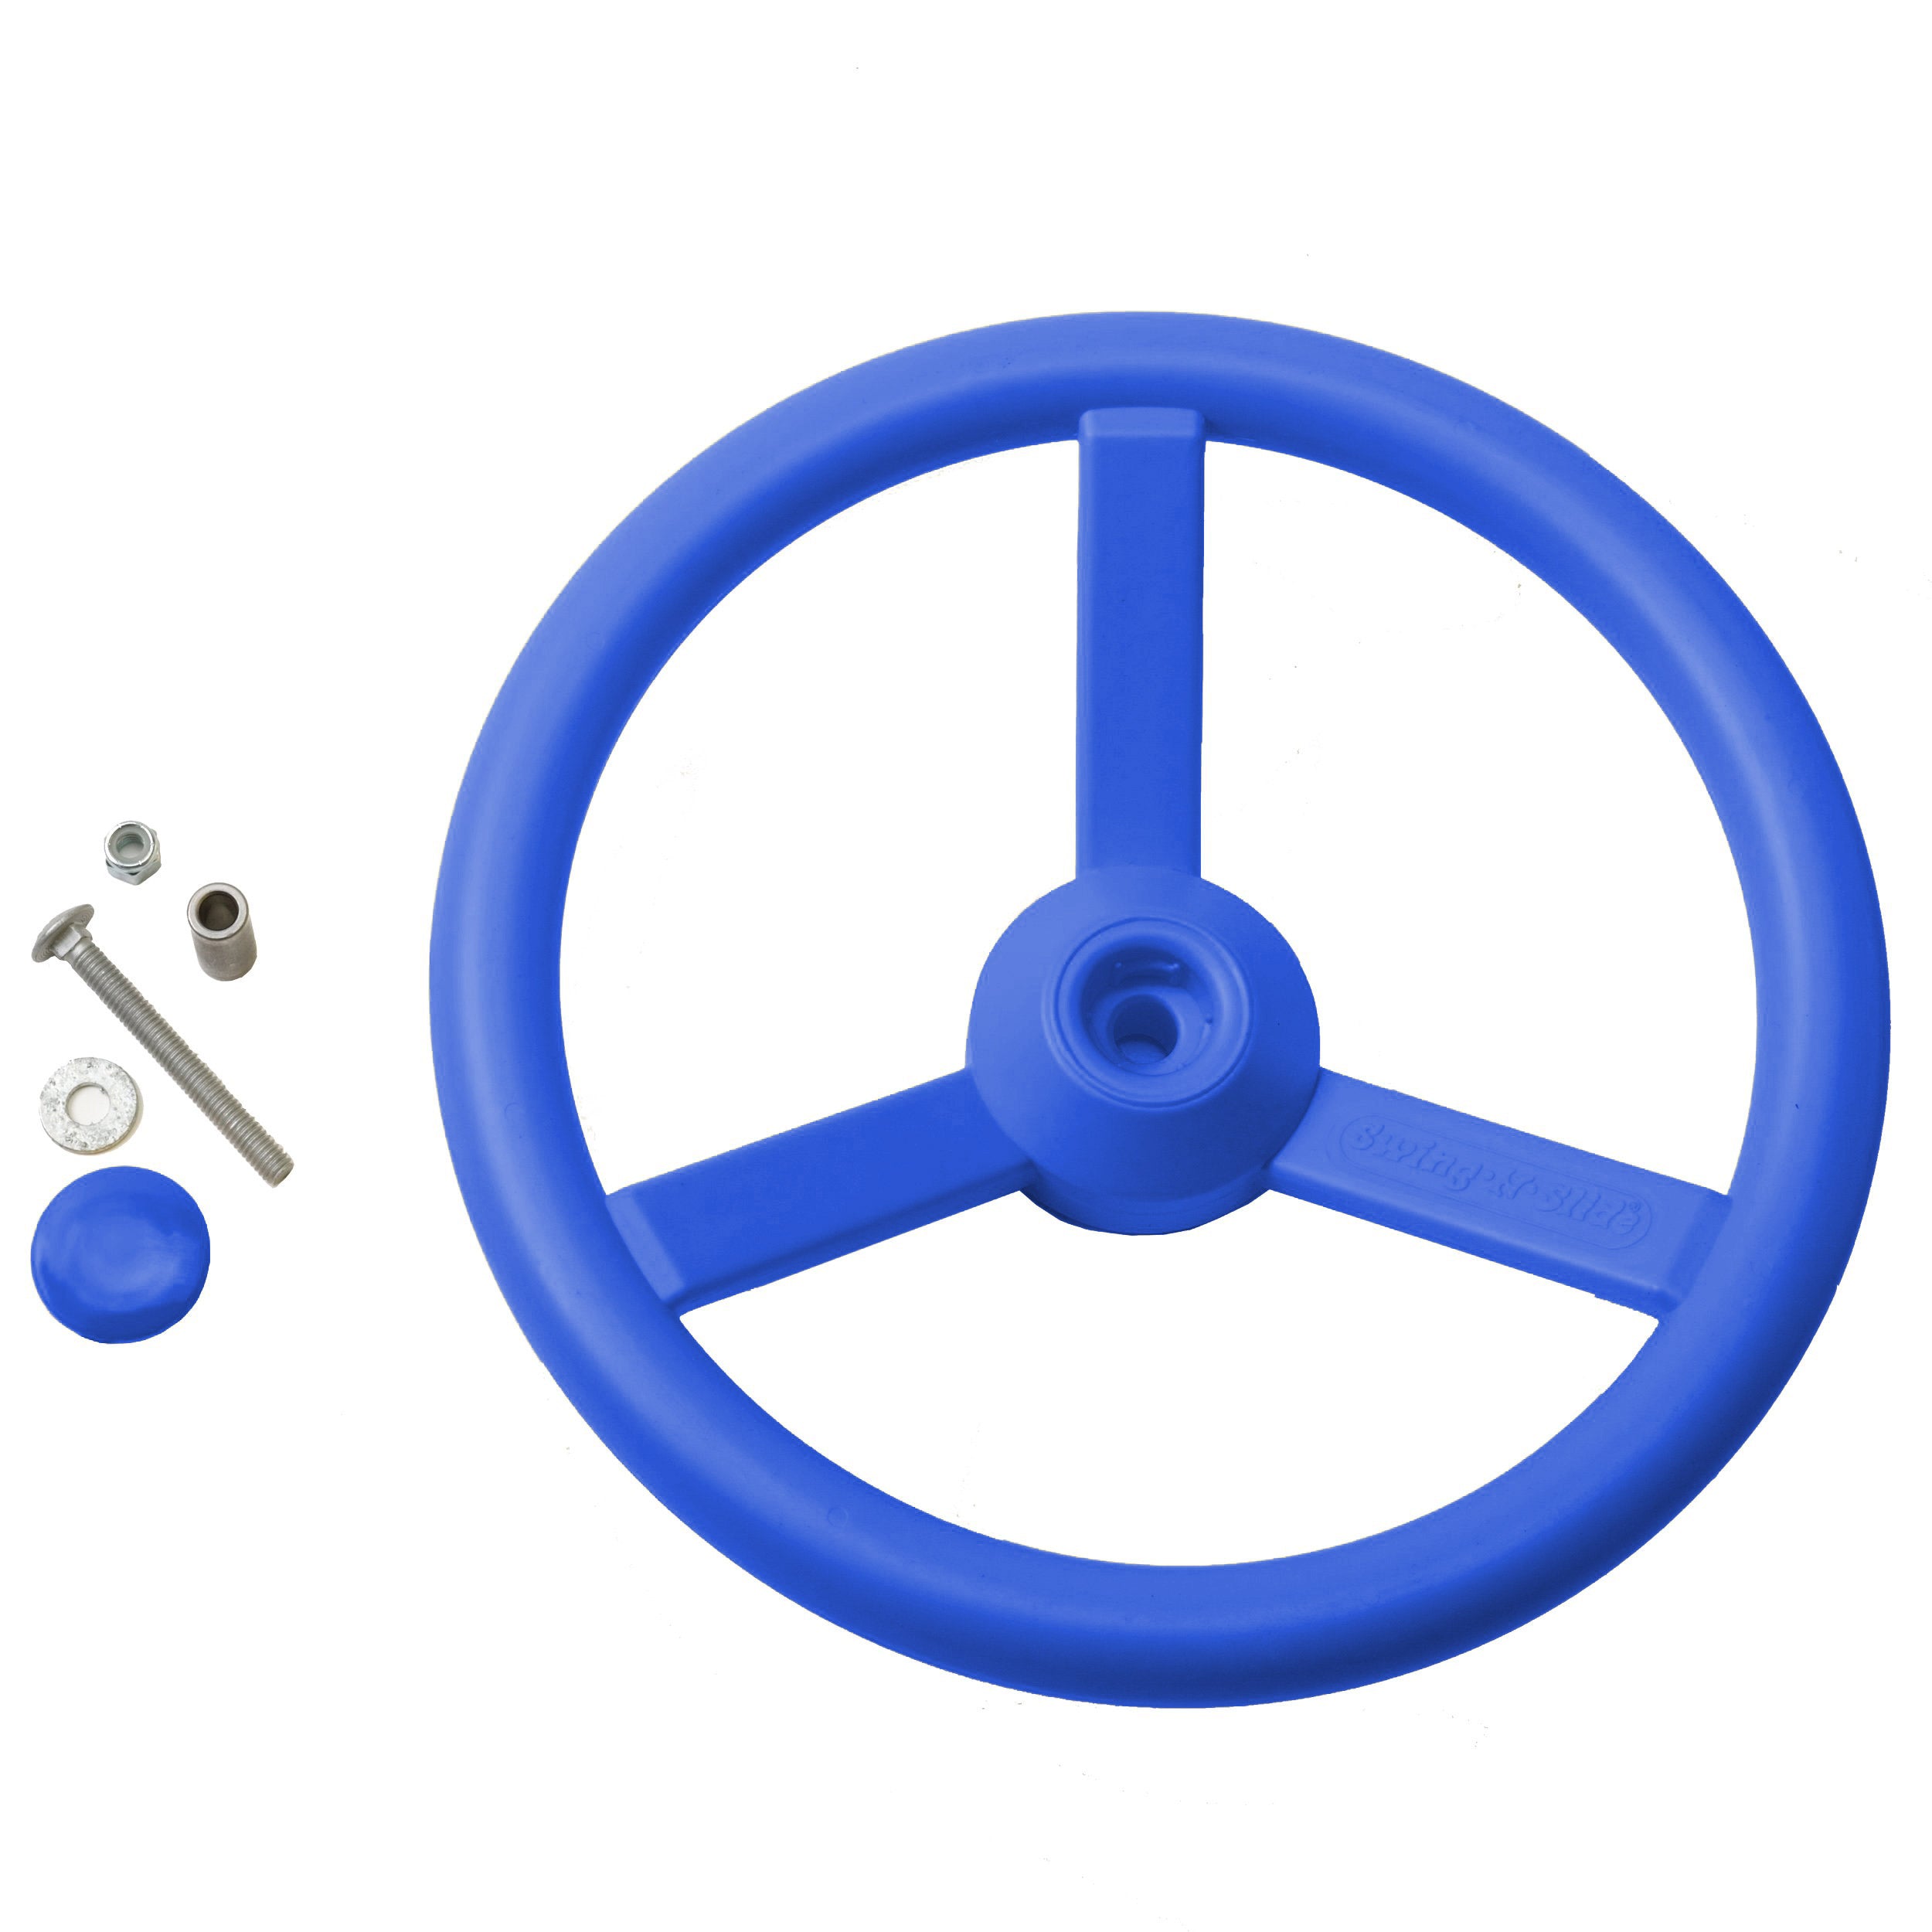 Steering Wheel Swing Set Accessory | WillyGoat Playground & Park Equipment